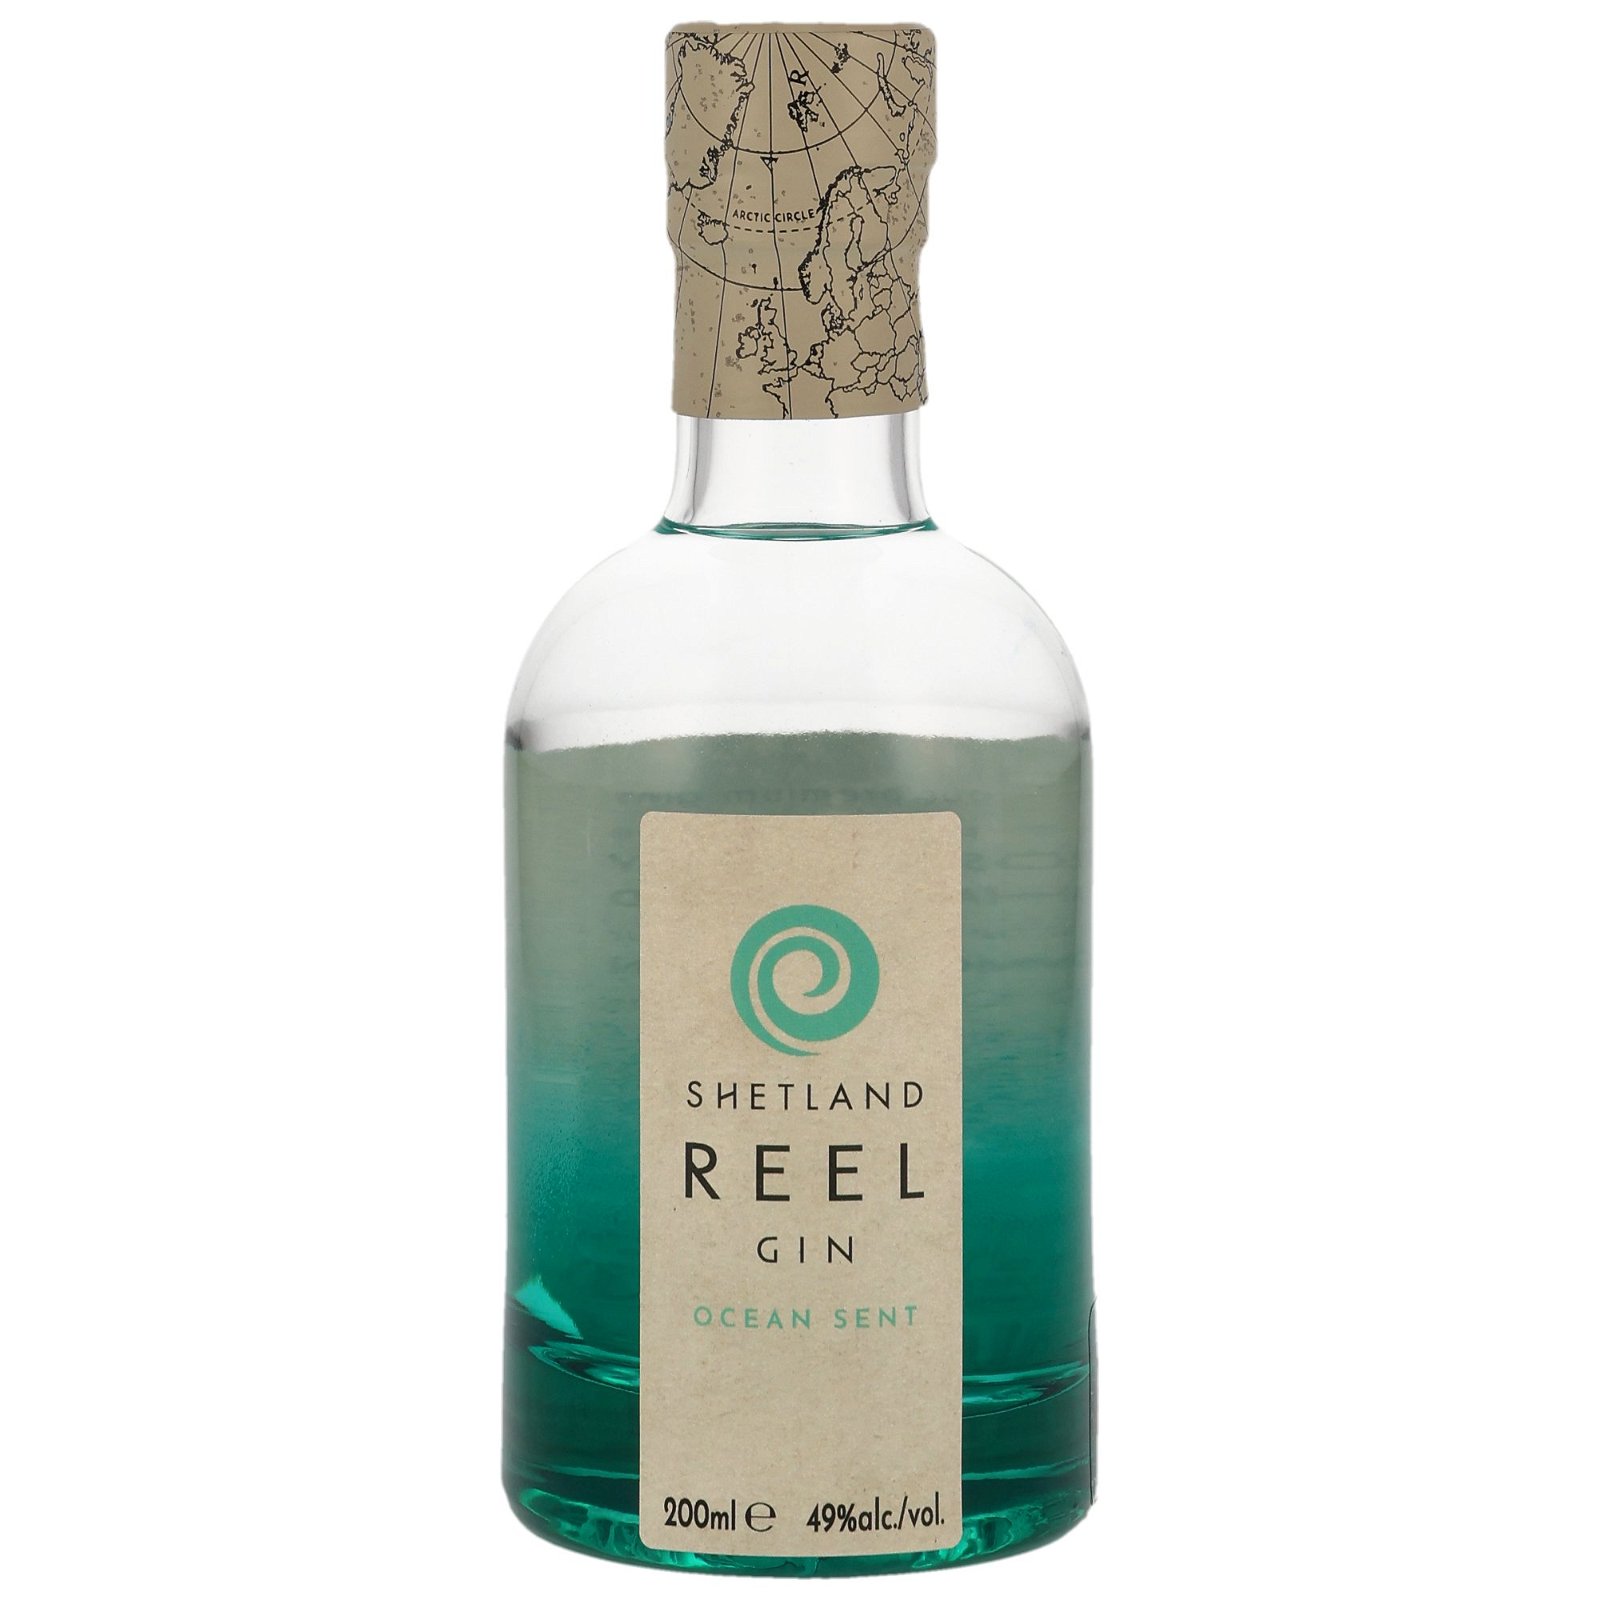 Shetland Reel Ocean Sent Gin (200 ml)